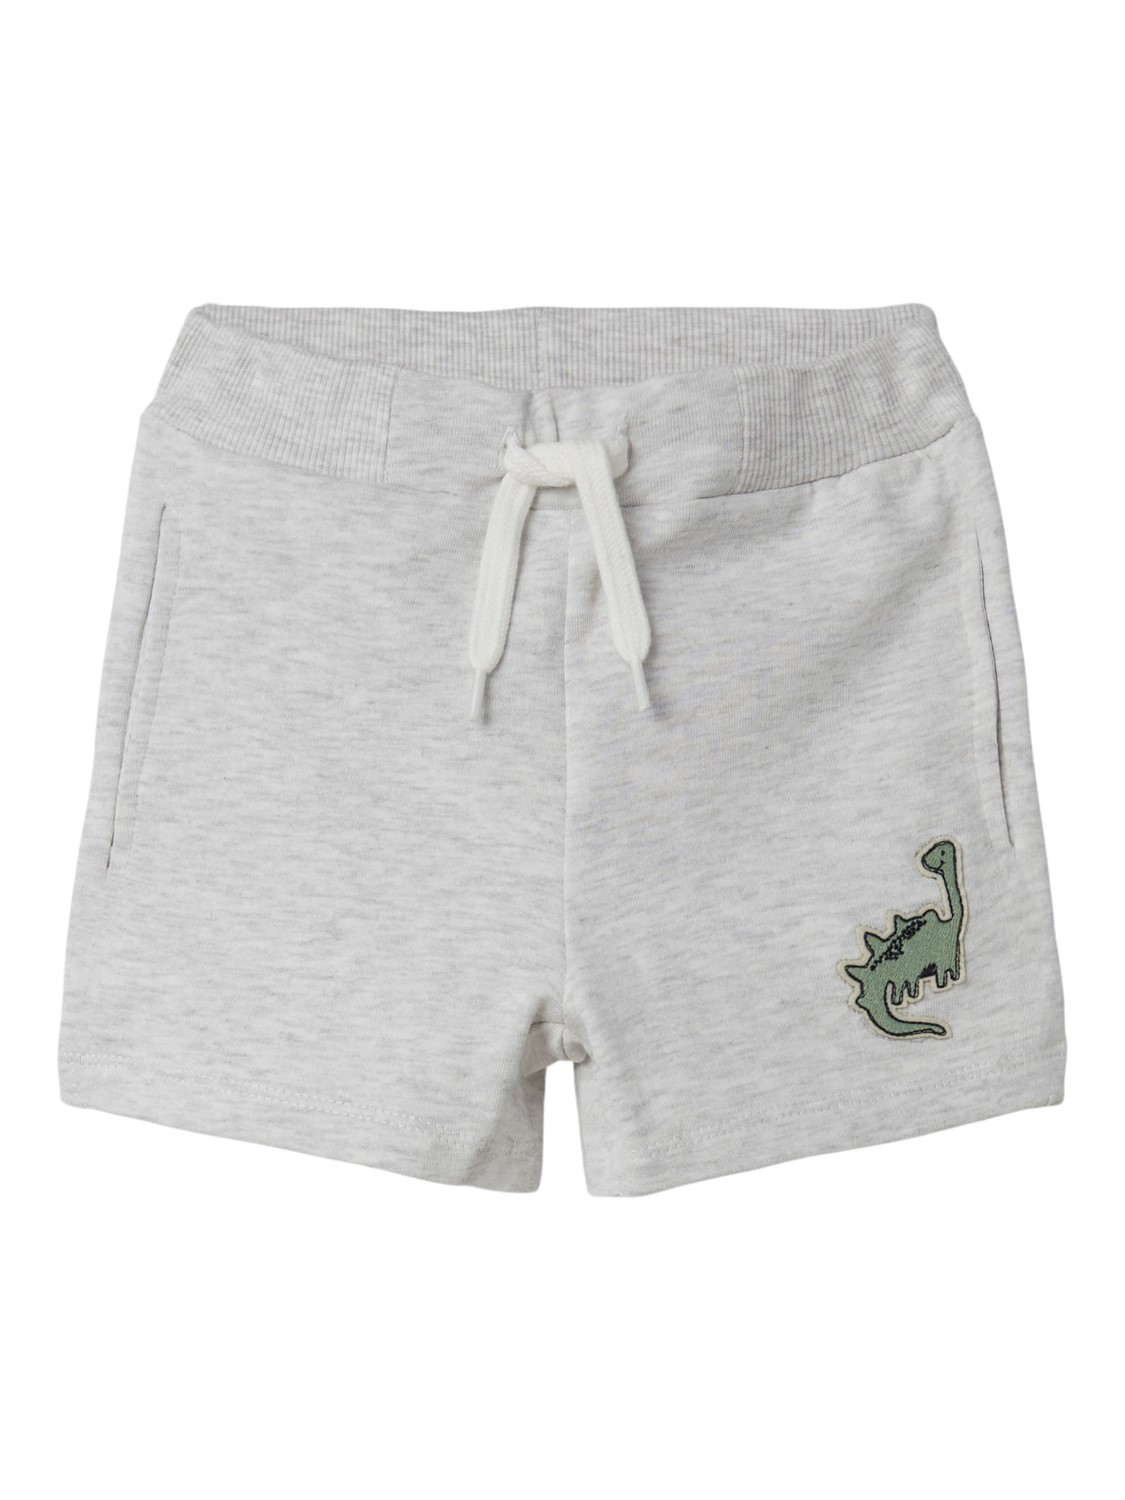 Fro Sweat Shorts - Grey Melange